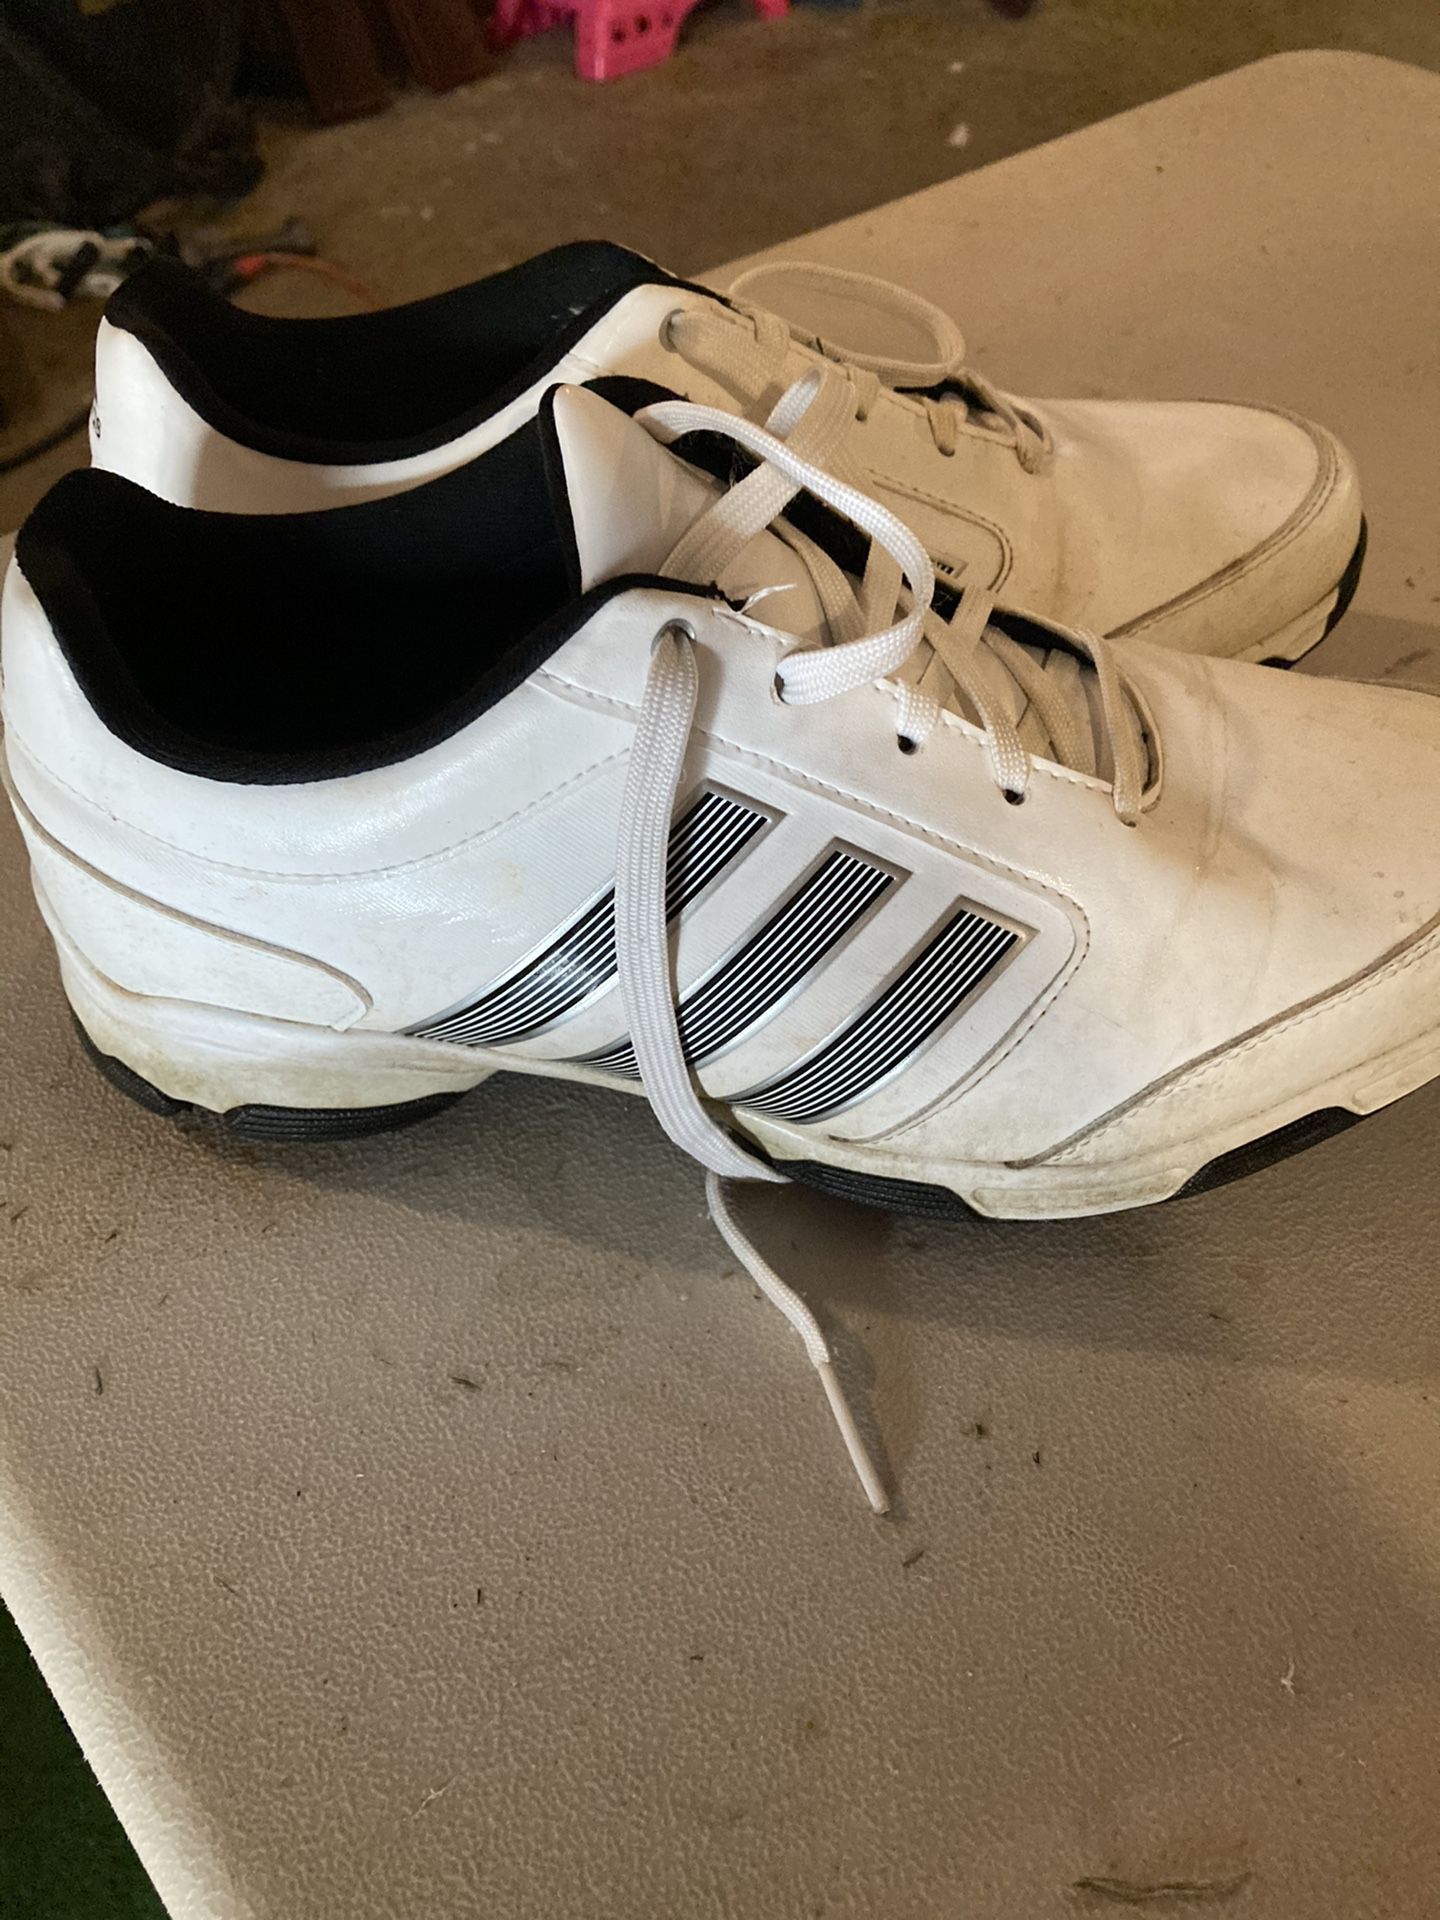 Men’s Adidas Golf Shoes Size 8.5